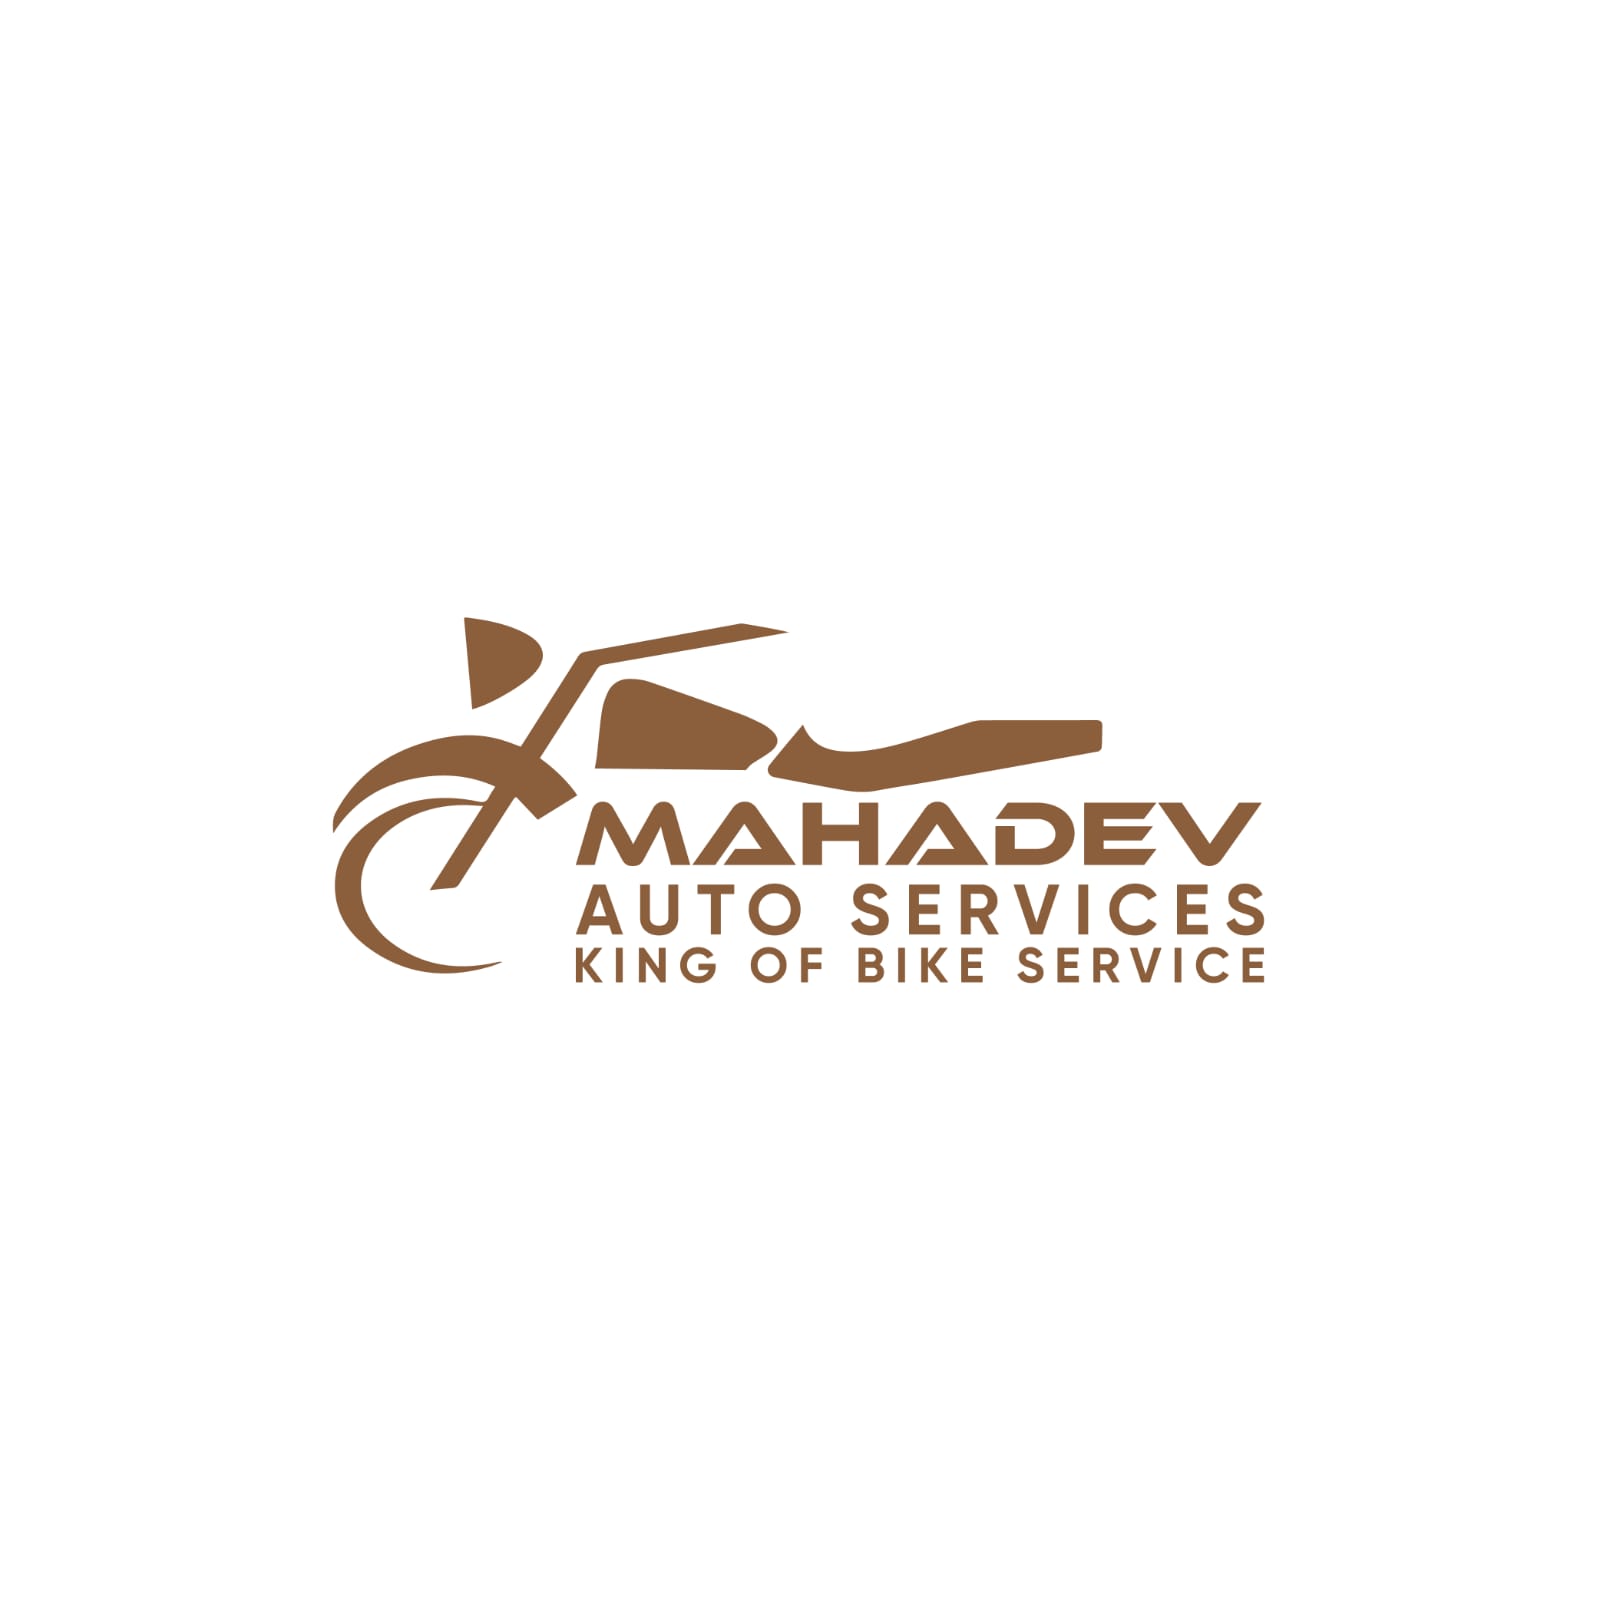 Mahadev Auto Services